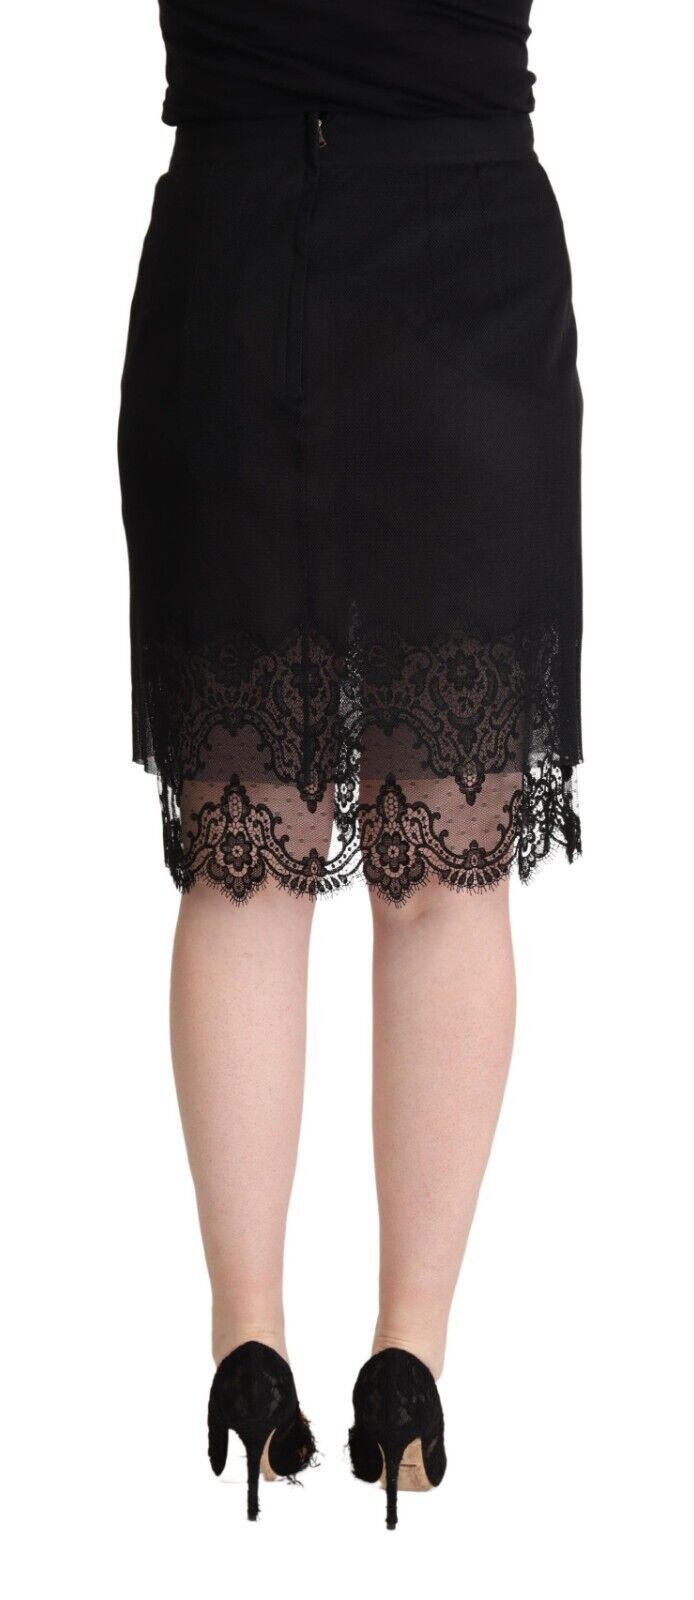 Black Floral Lace High Waist  Pencil Cut Skirt